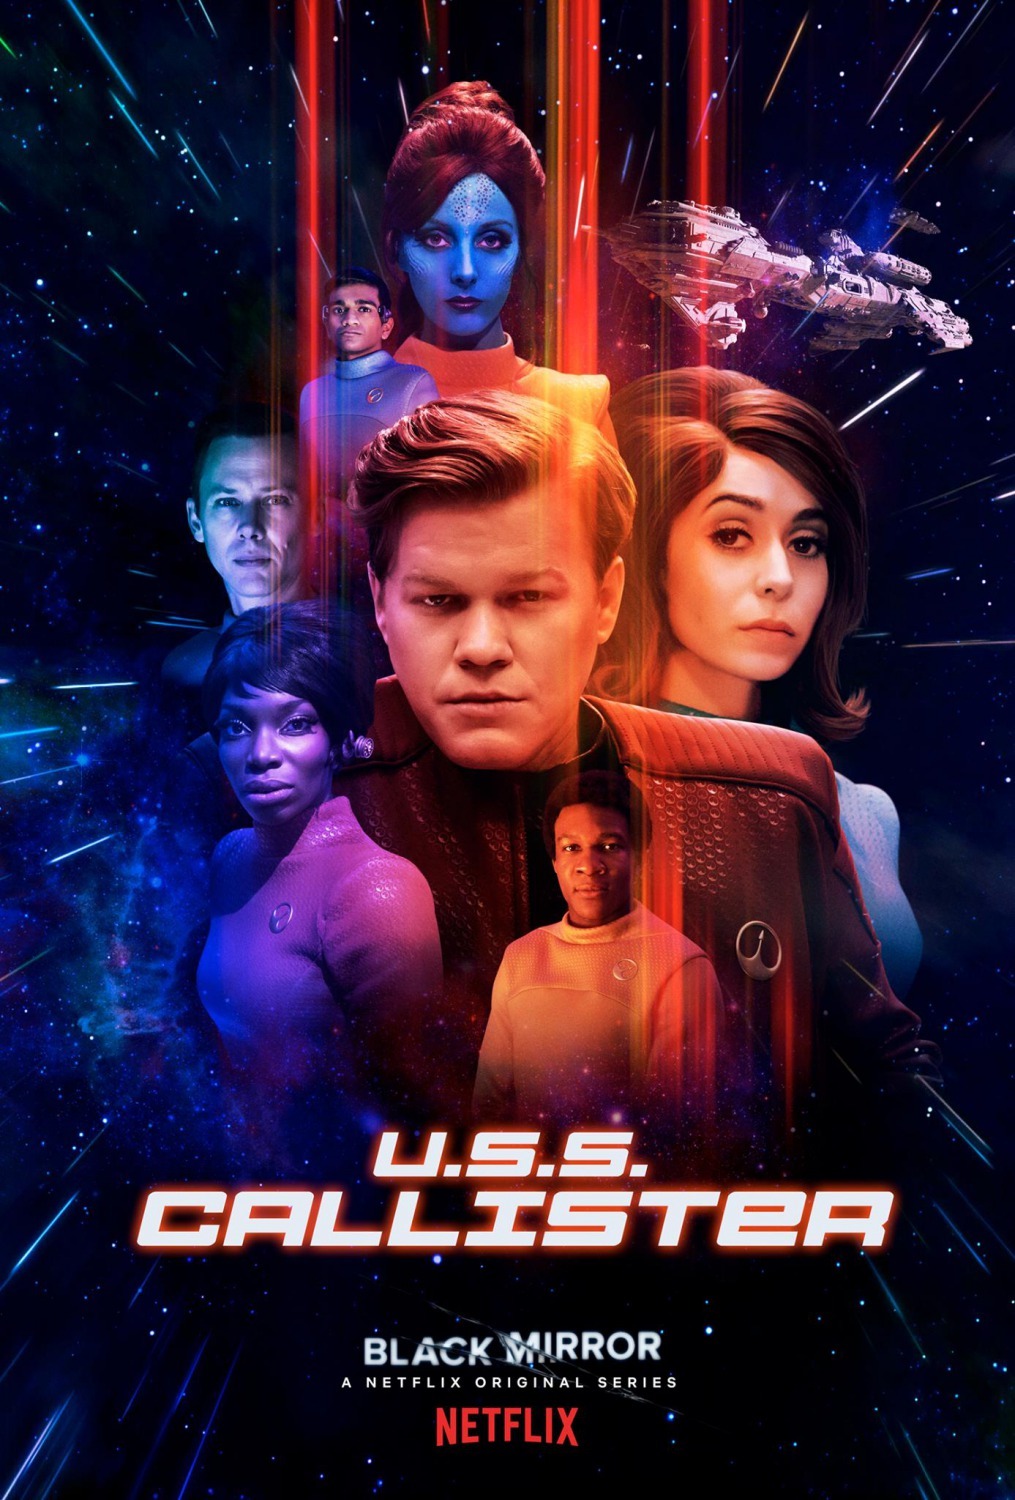 Black Mirror: USS Callister | Season 4 | Episode 1